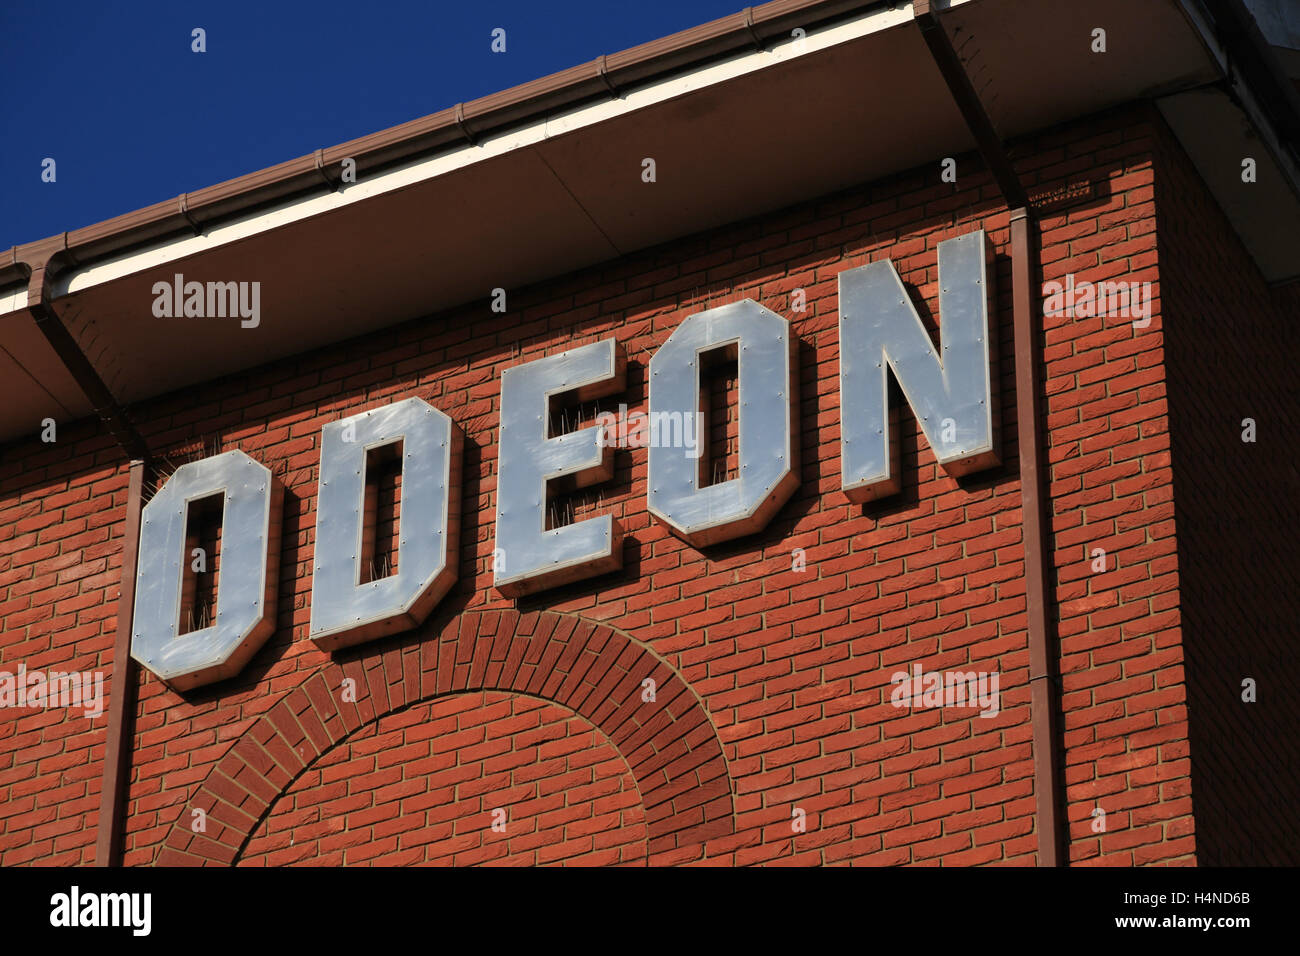 Odeon cinema sign, Chelmsford, Essex Stock Photo